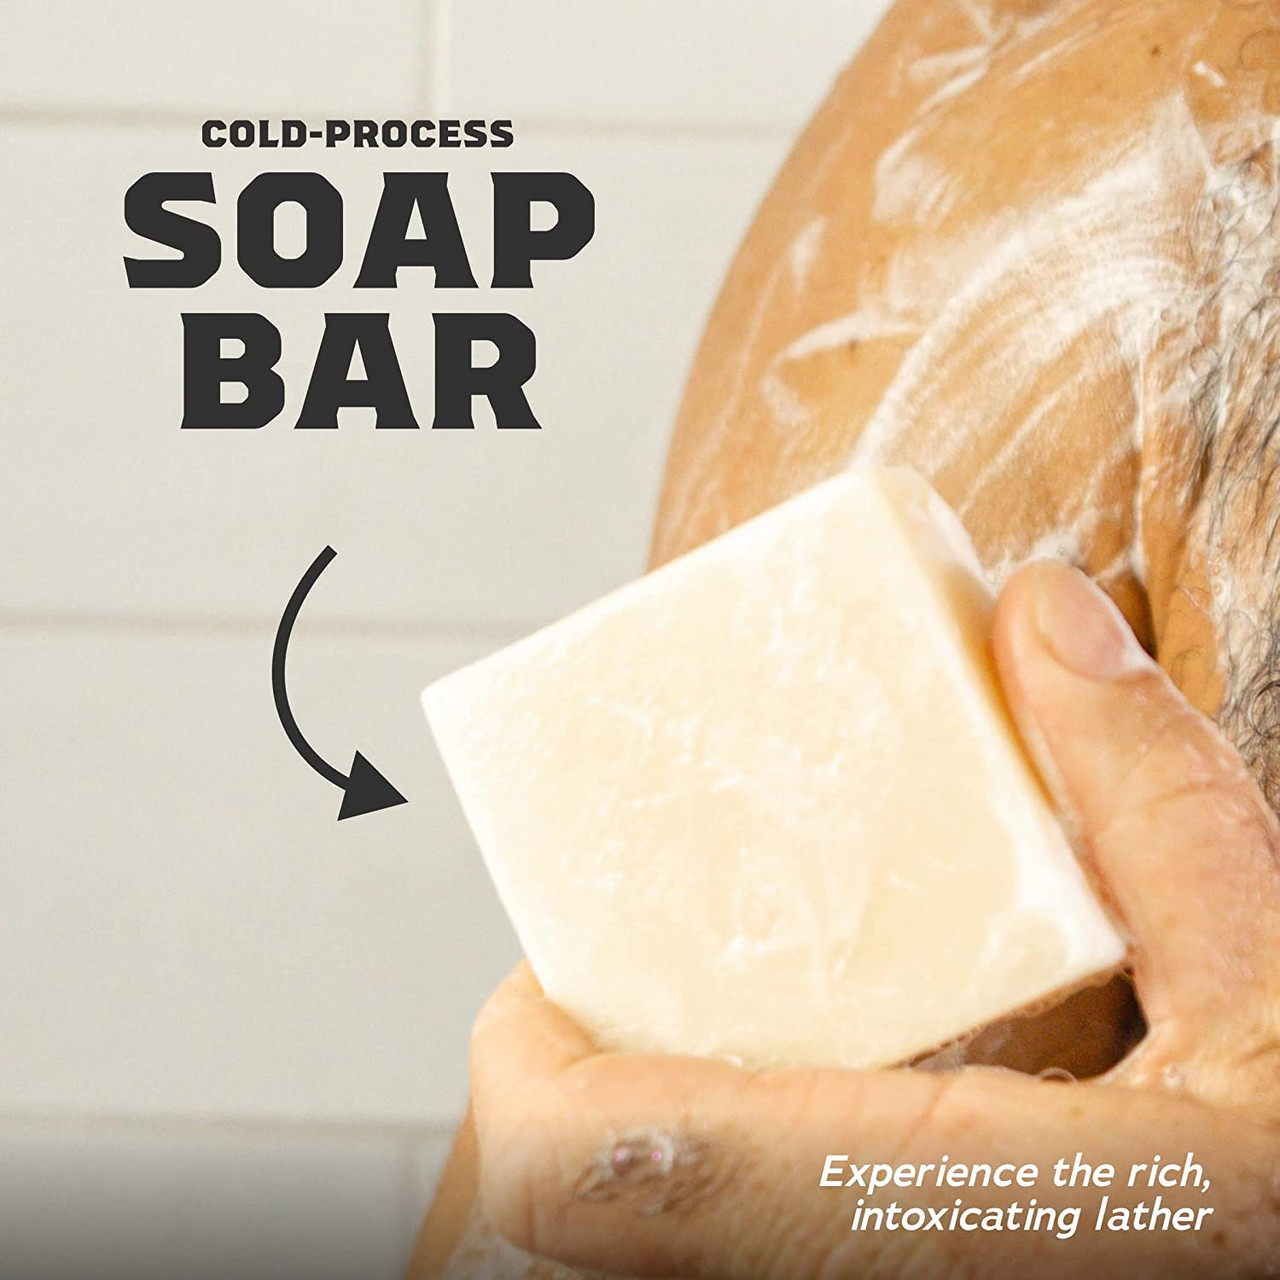 Dr. Squatch - Natural Bar Soap Pine Tar - 5 oz.(Pack of 2)